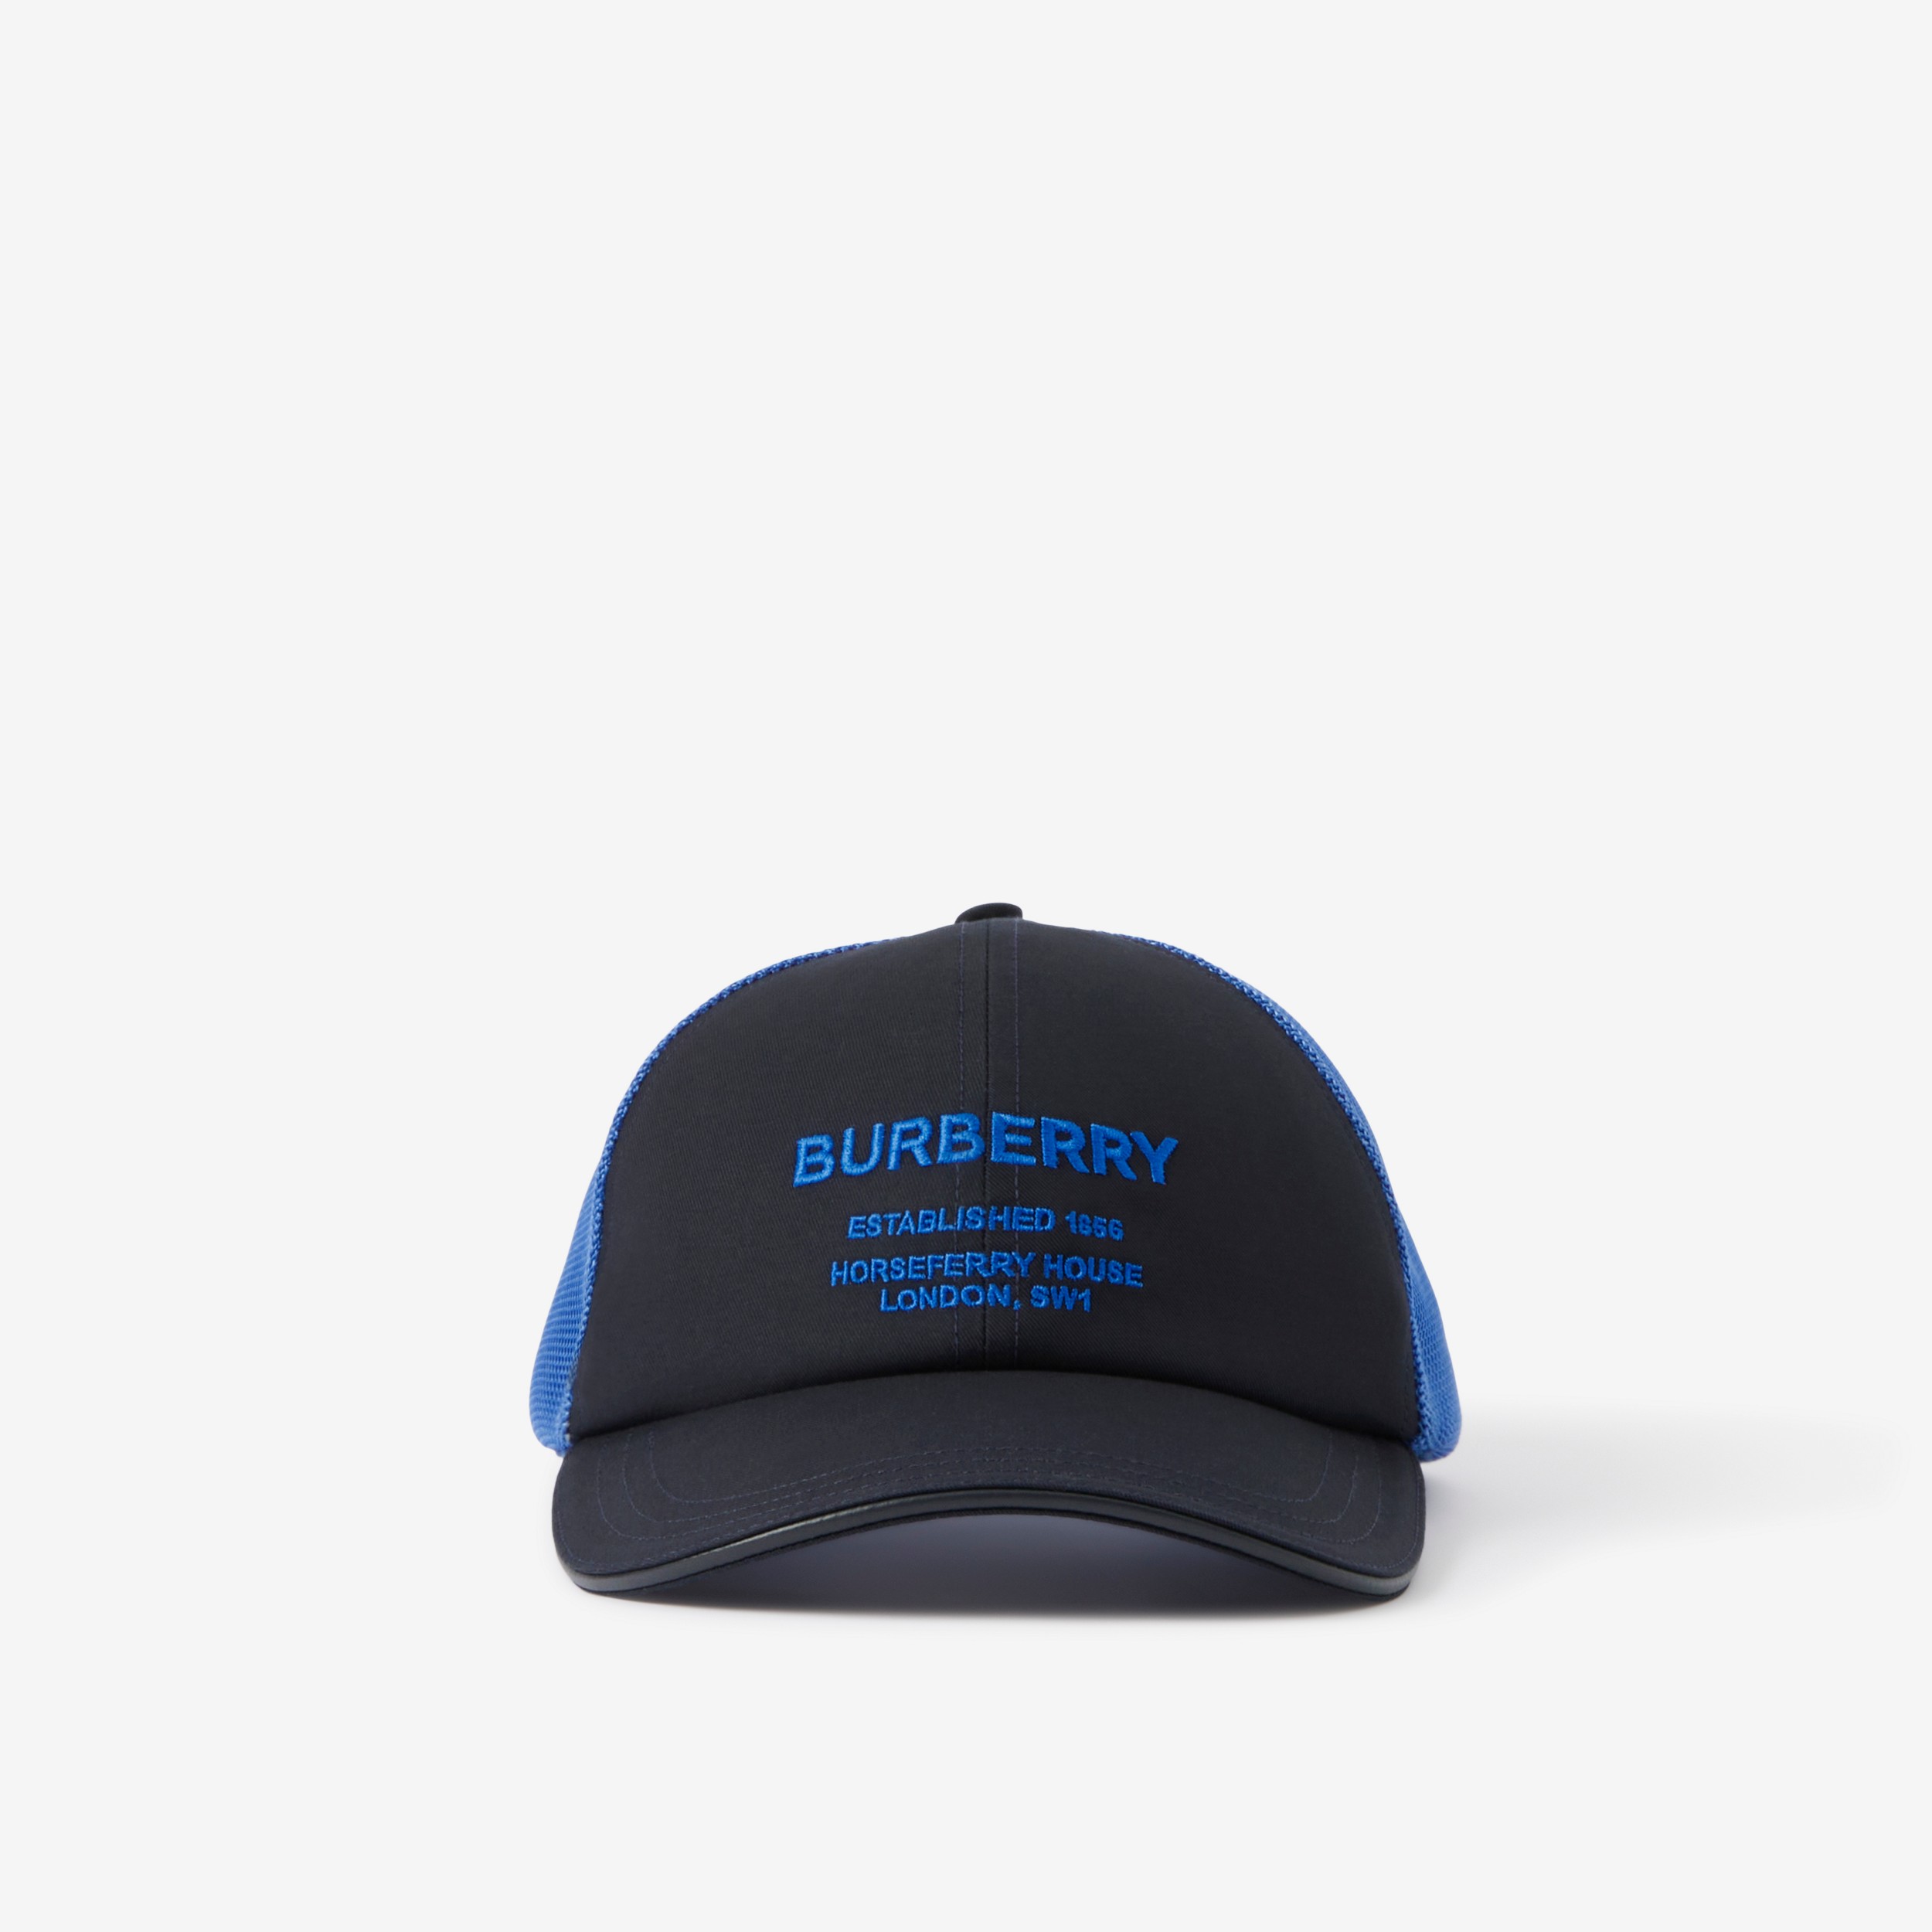 BURBERRY ホースフェリーモチーフ ベースボールキャップ-